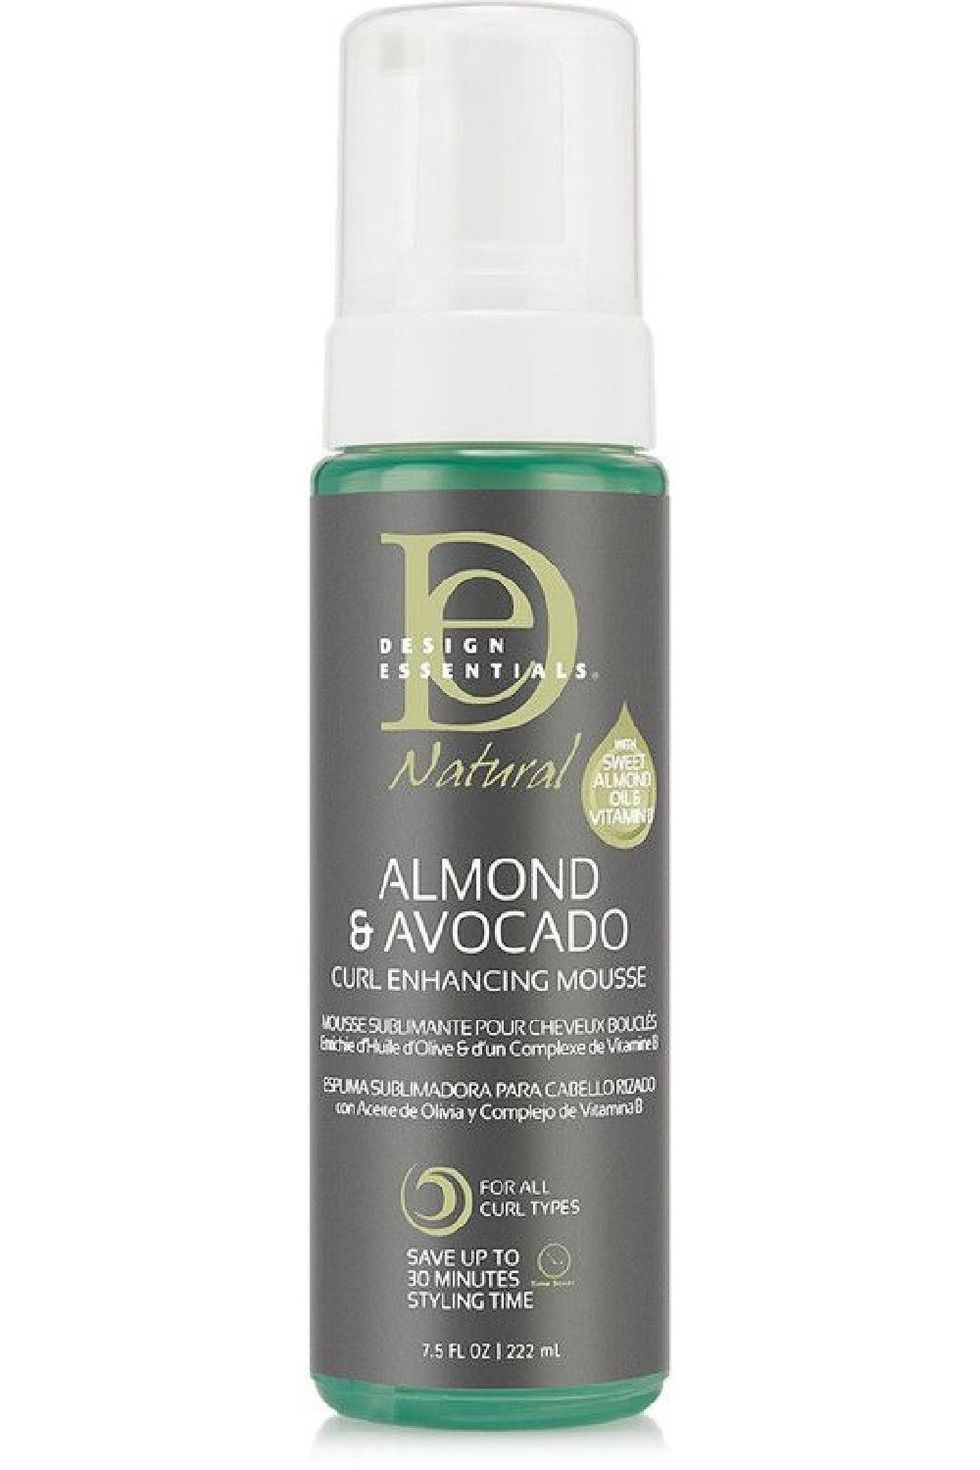 Design Essentials Natural Almond & Avocado Curl Enhancing Mousse